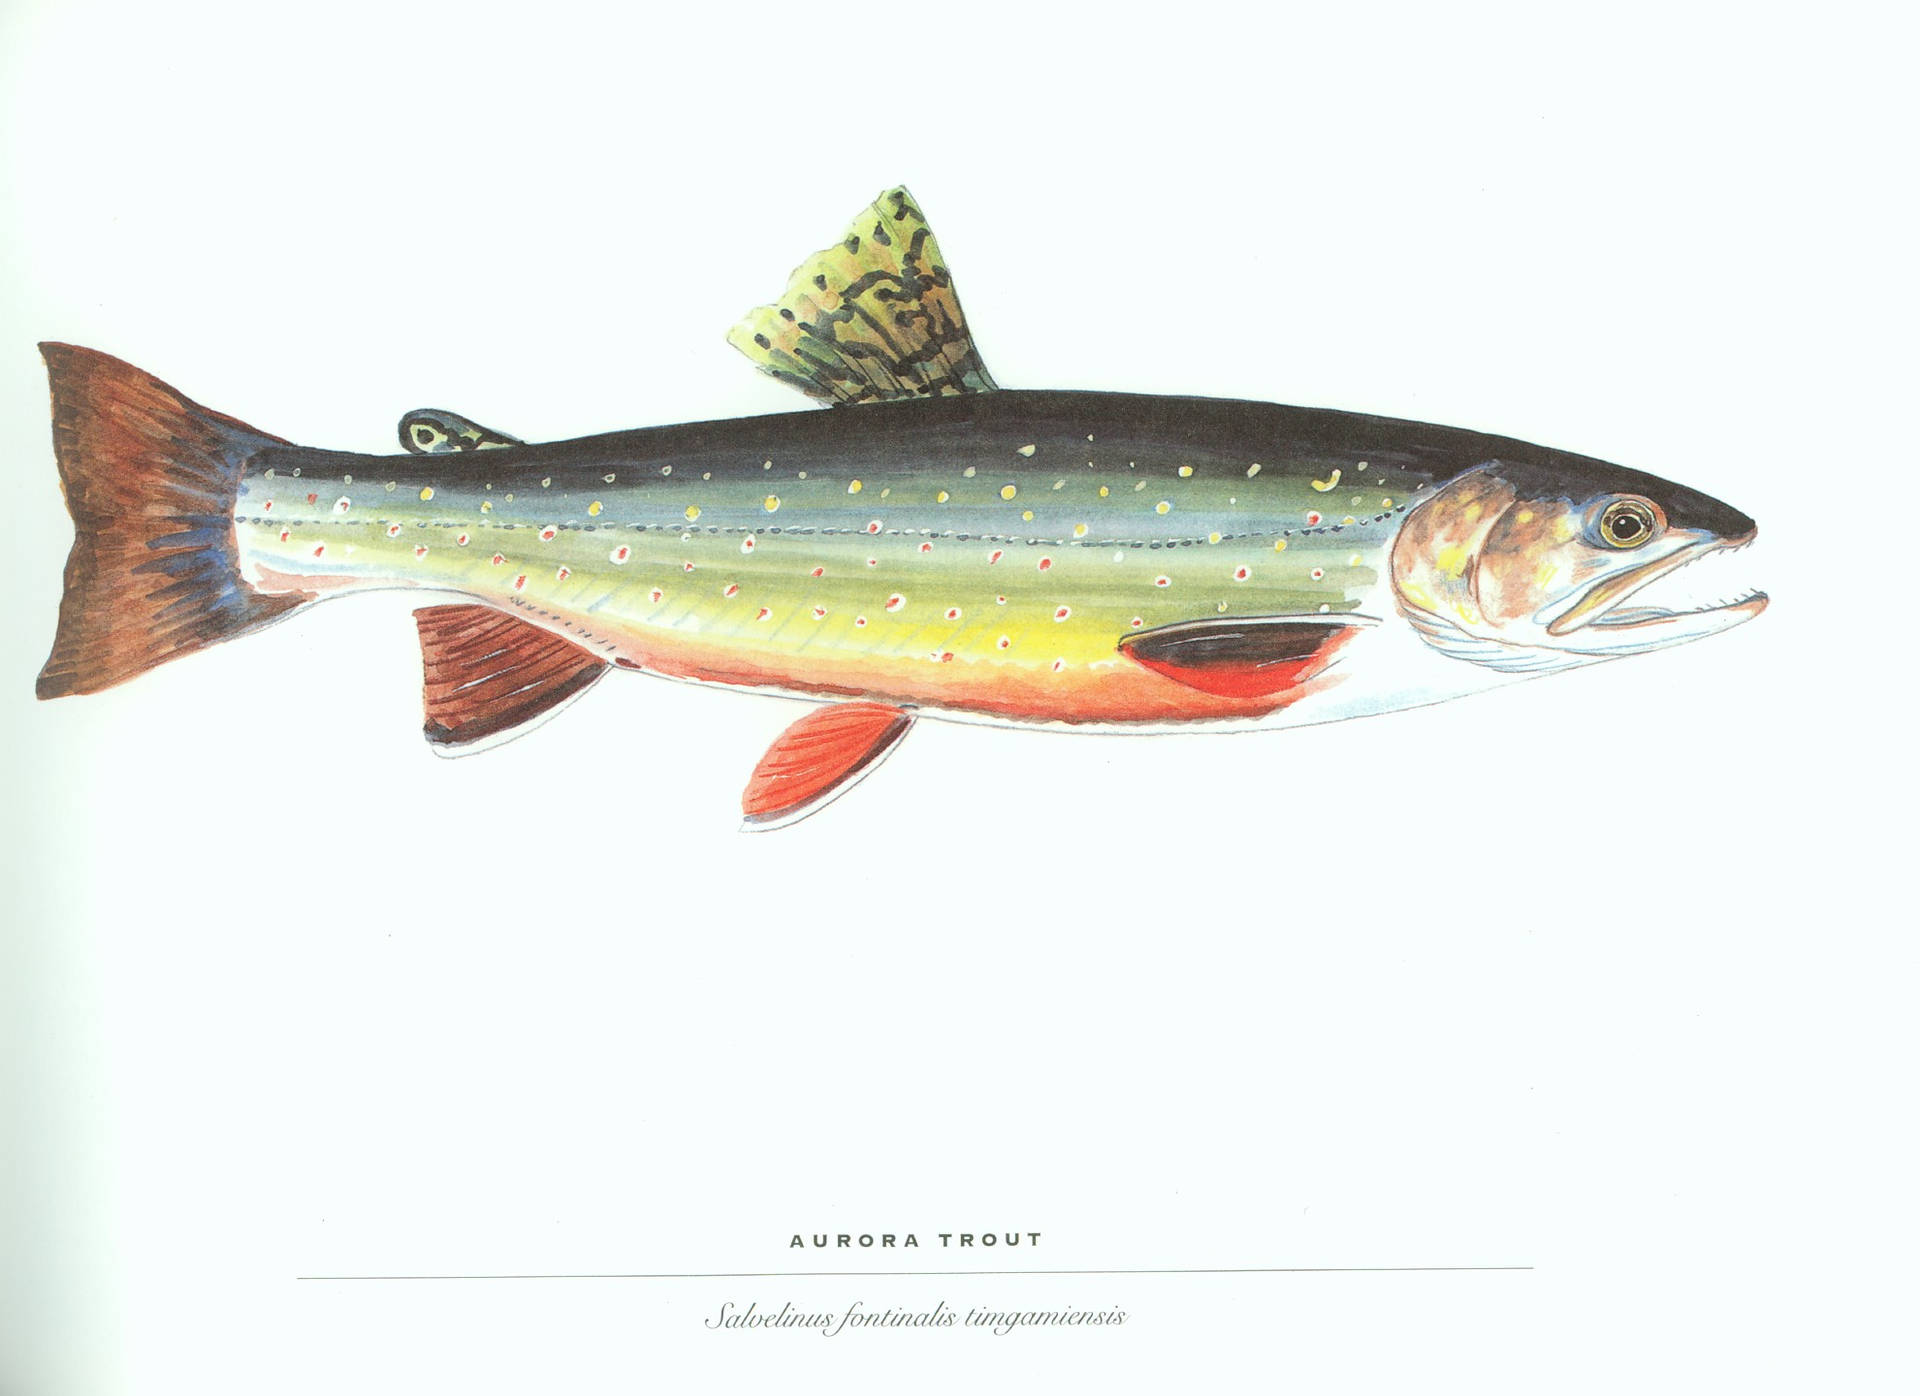 Brook Trout Fish Wallpaper